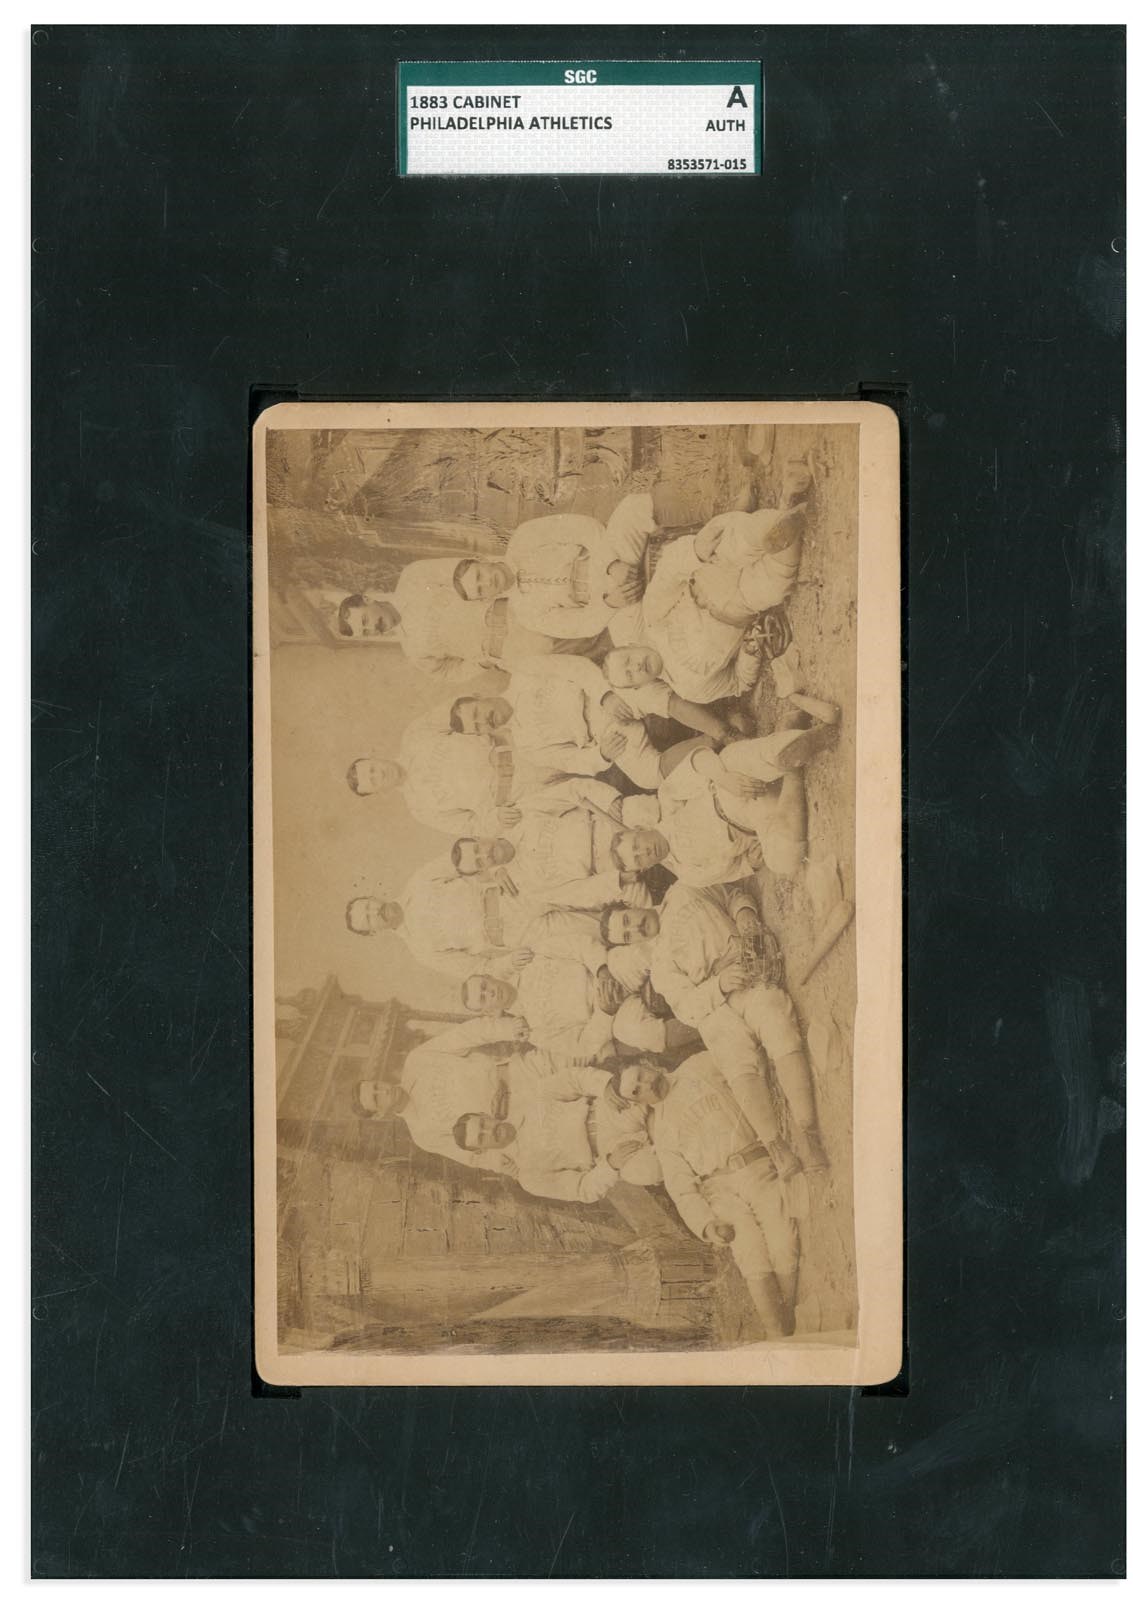 - 1883 Philadelphia Athletics Cabinet Photo (SGC A)